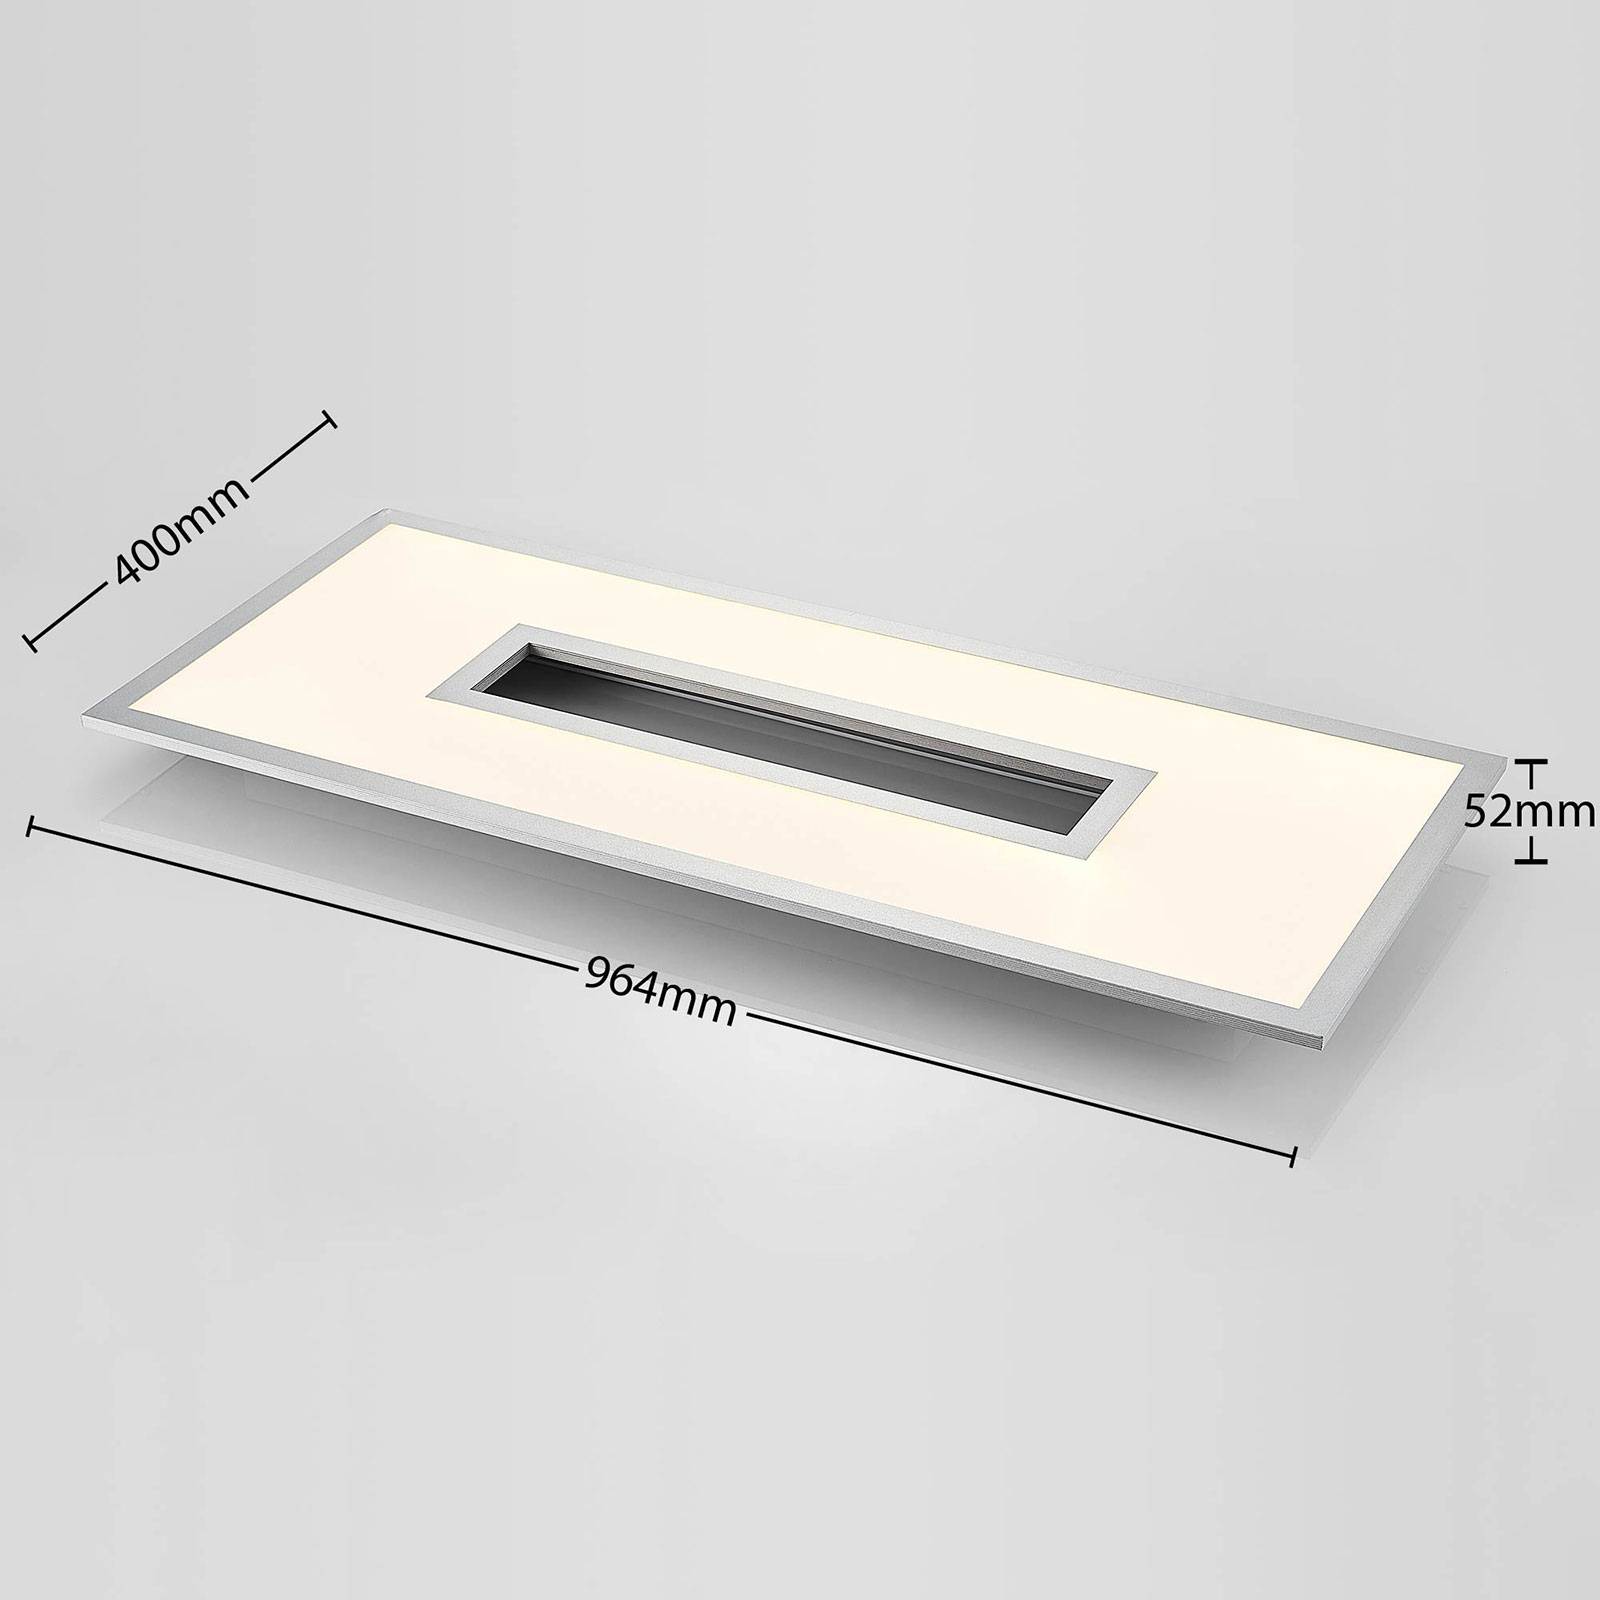 Image of Lucande Plafonnier LED Durun, dimmable, CCT, carré, 96 cm 4251096559651